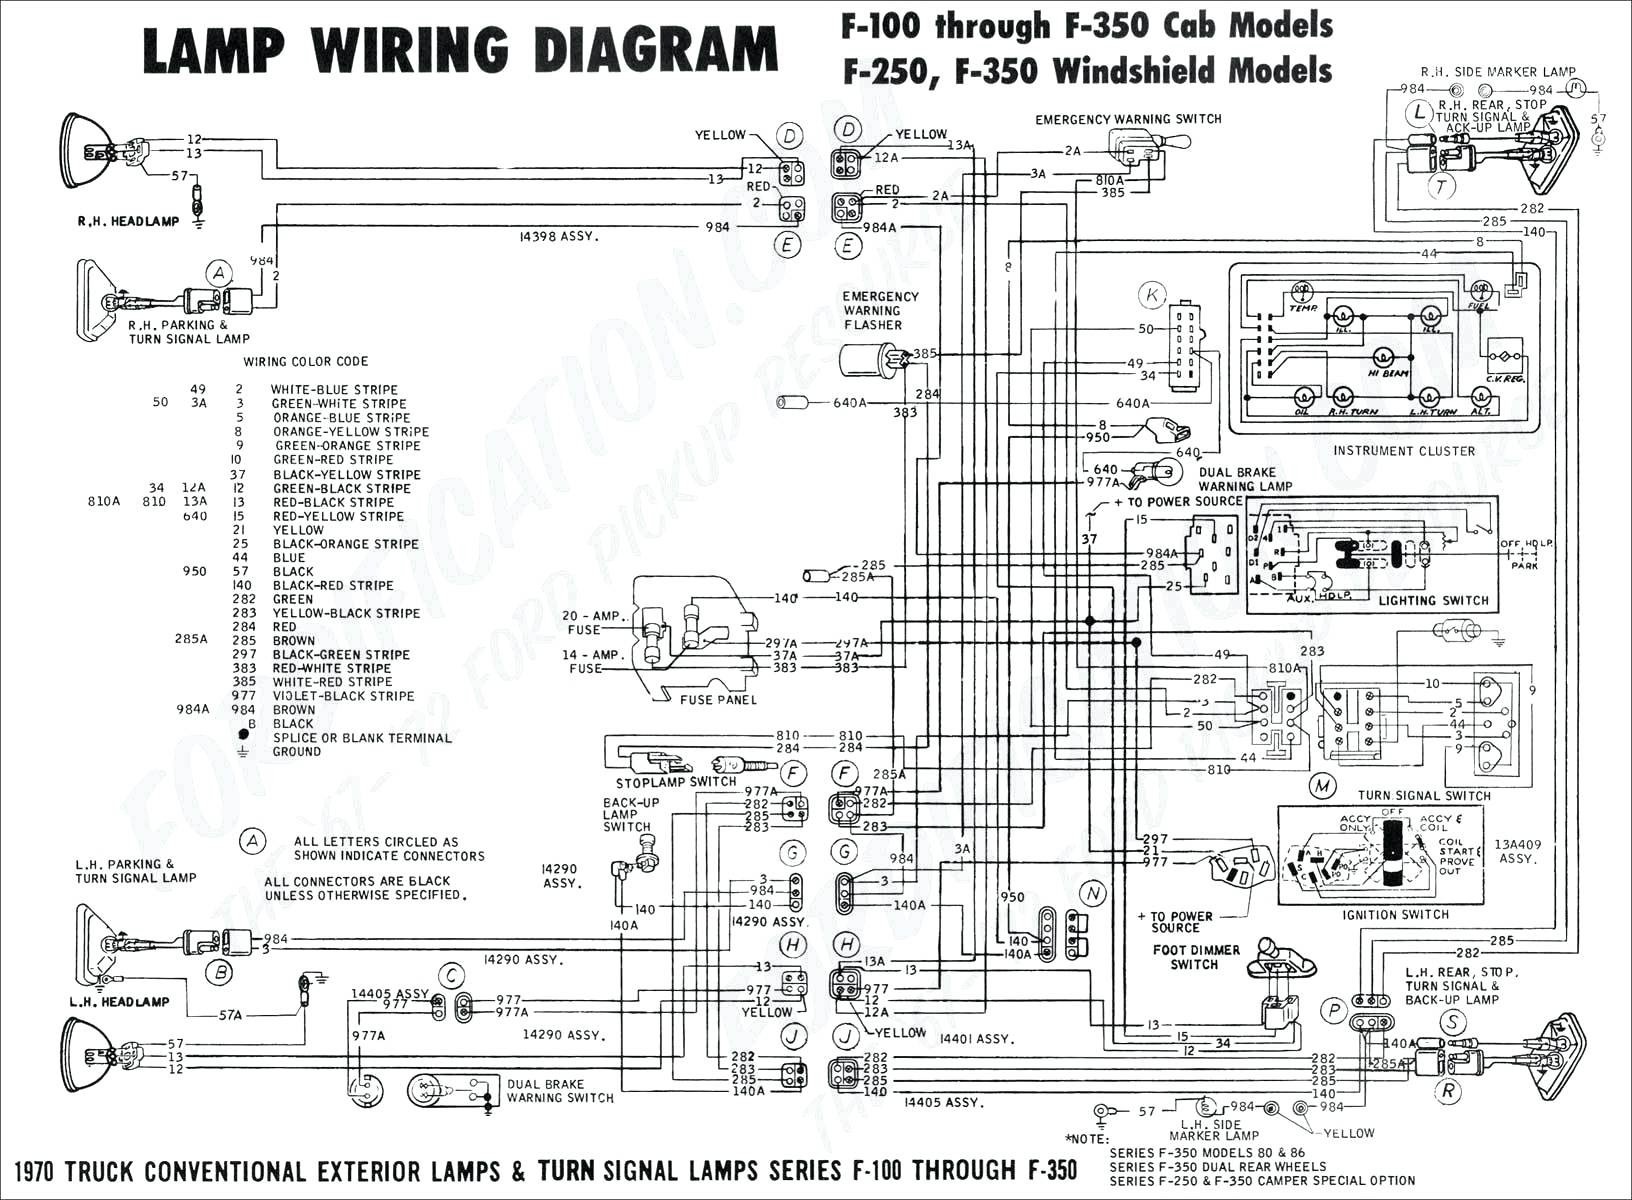 1999 ford F150 Engine Diagram ford F 350 Wiring Harness Diagrams Simple Guide About Of 1999 ford F150 Engine Diagram